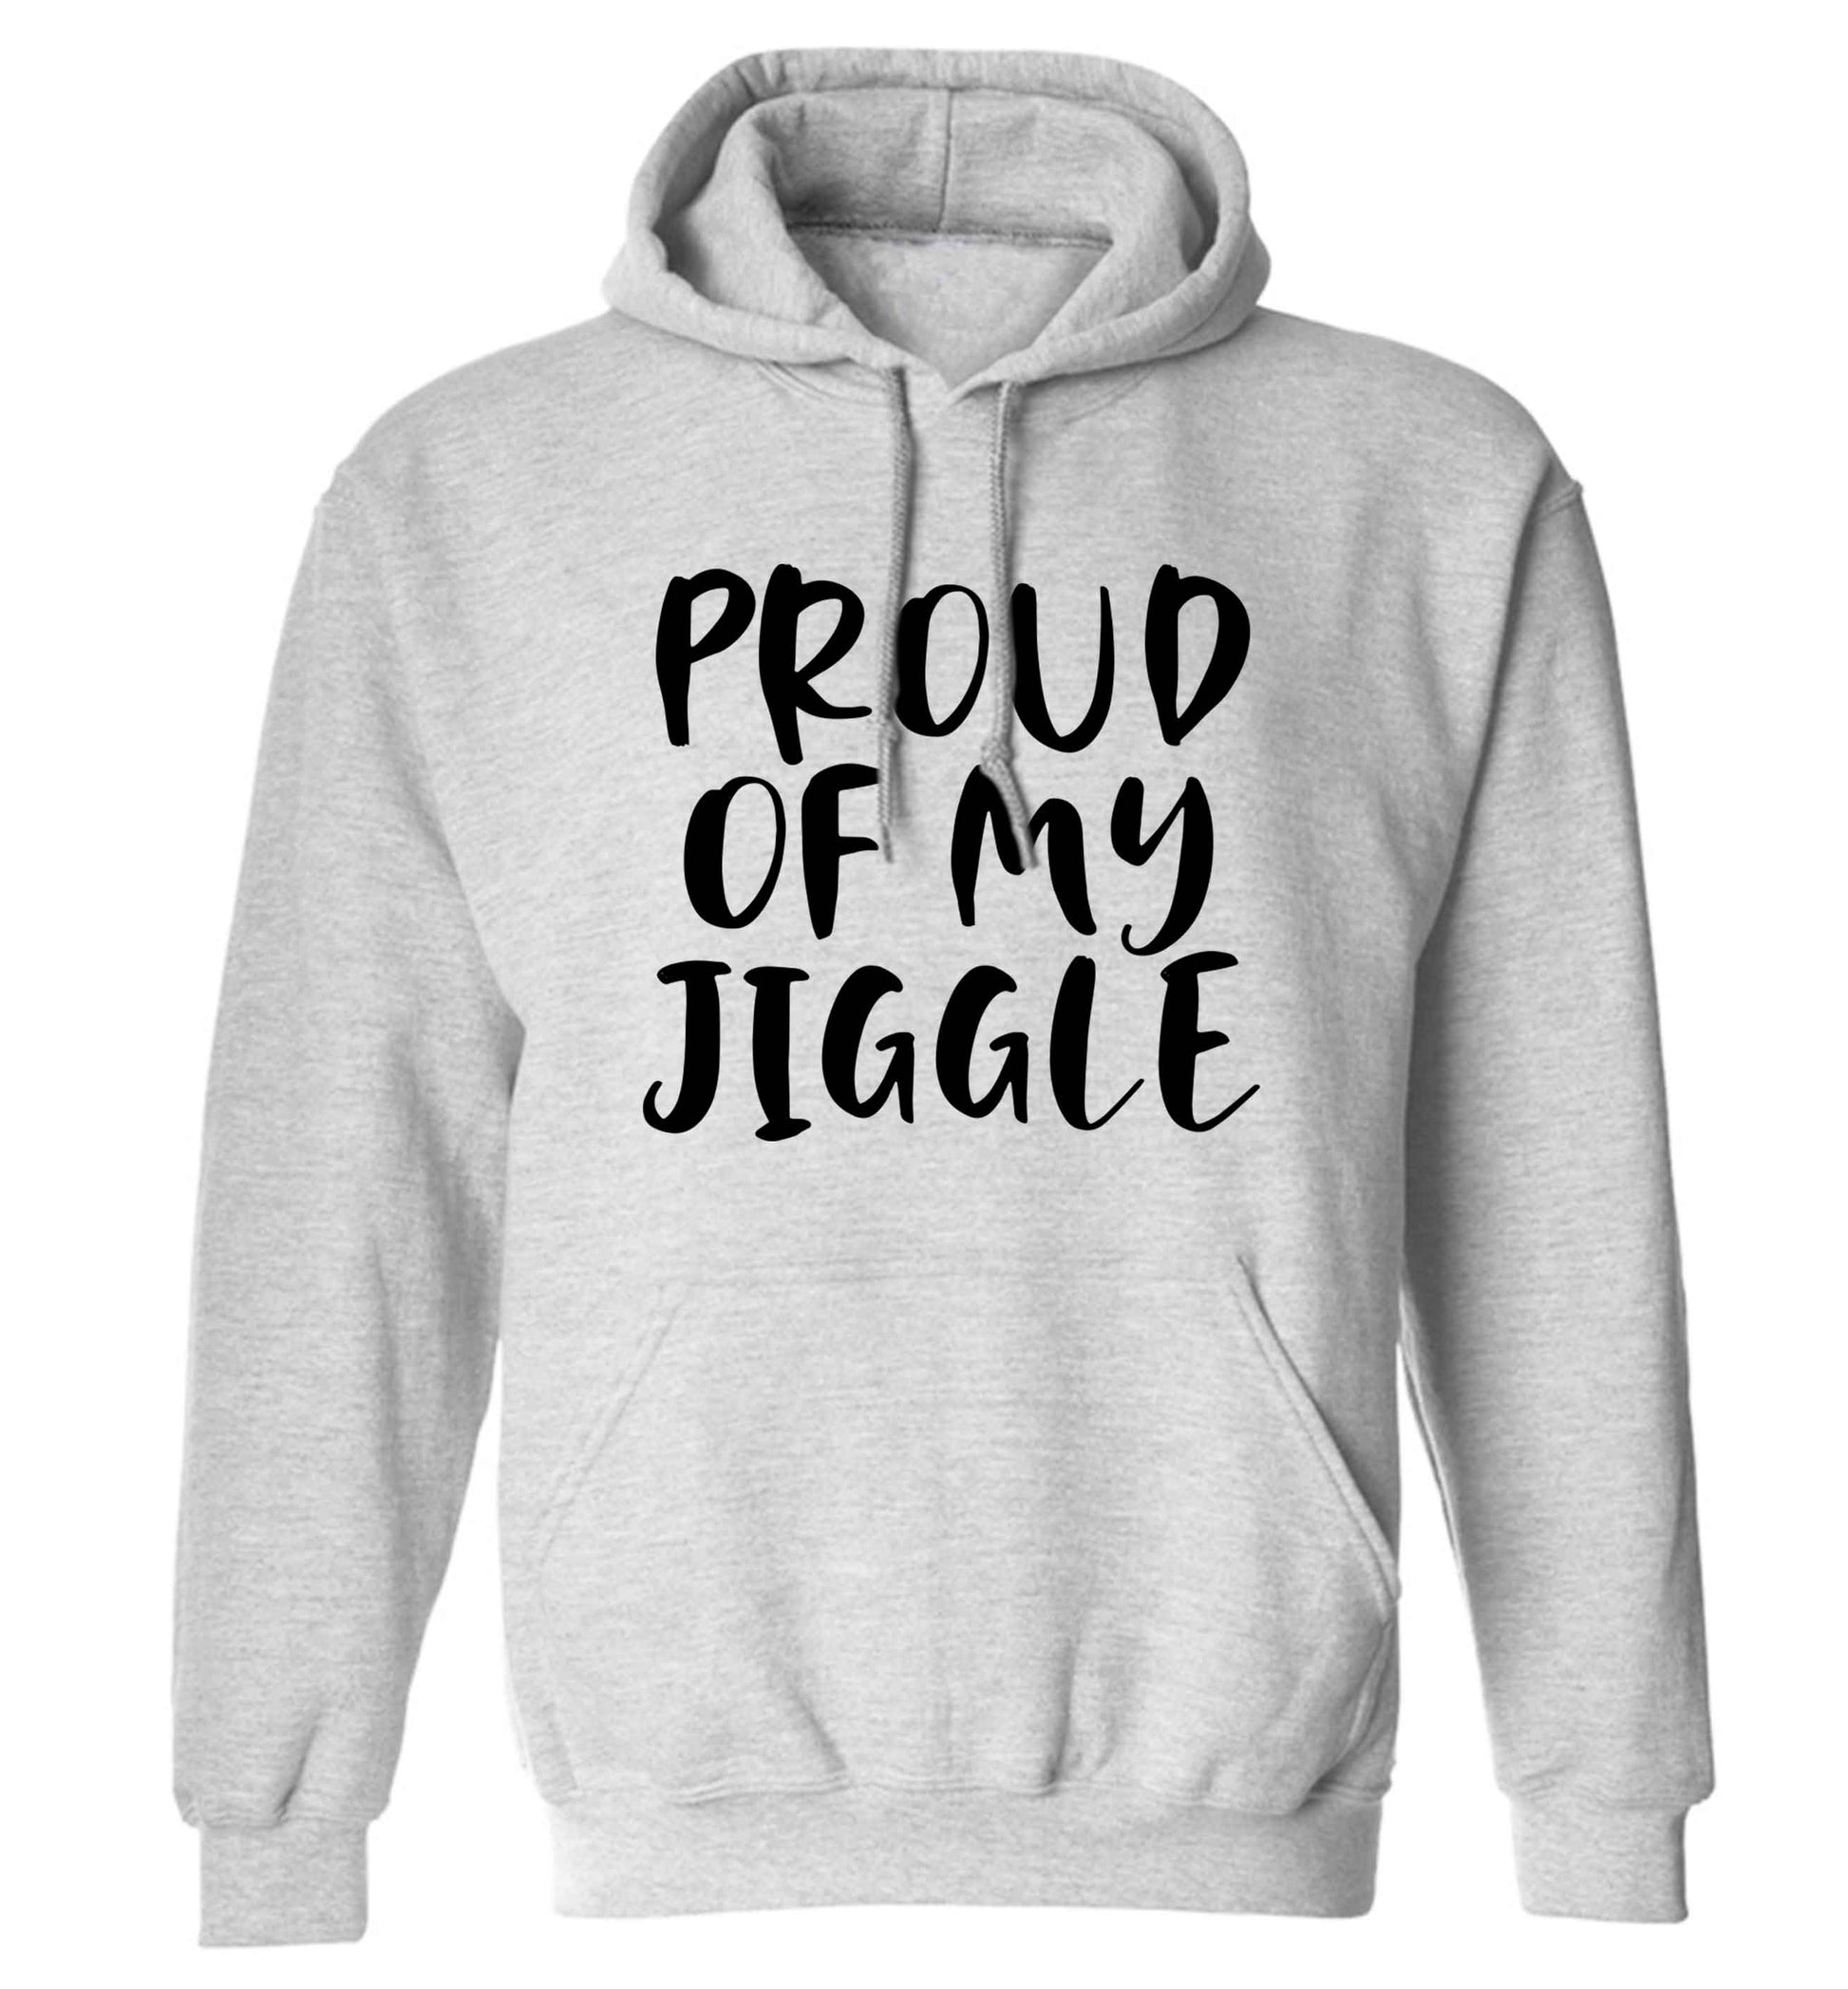 Proud of my jiggle adults unisex grey hoodie 2XL